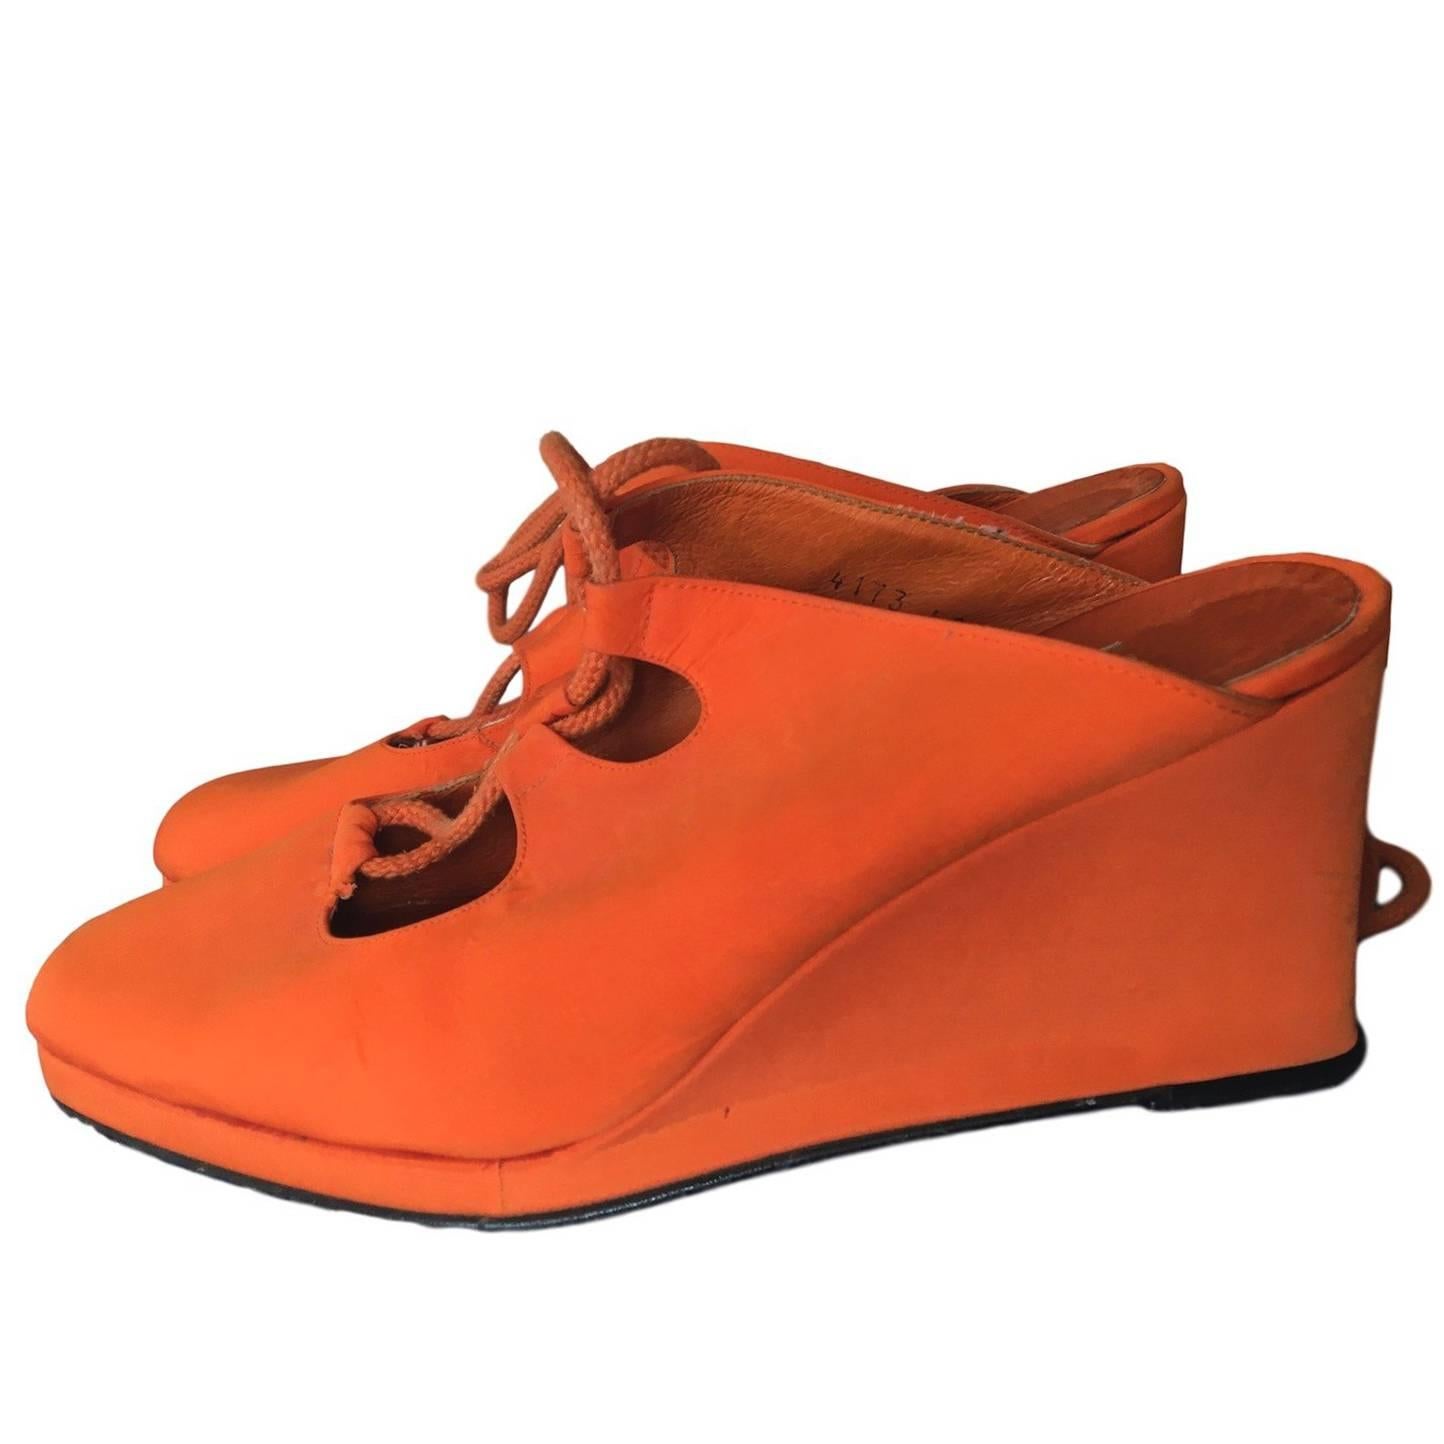 Biba Vintage Platform shoes Orange UK 7 EU 40